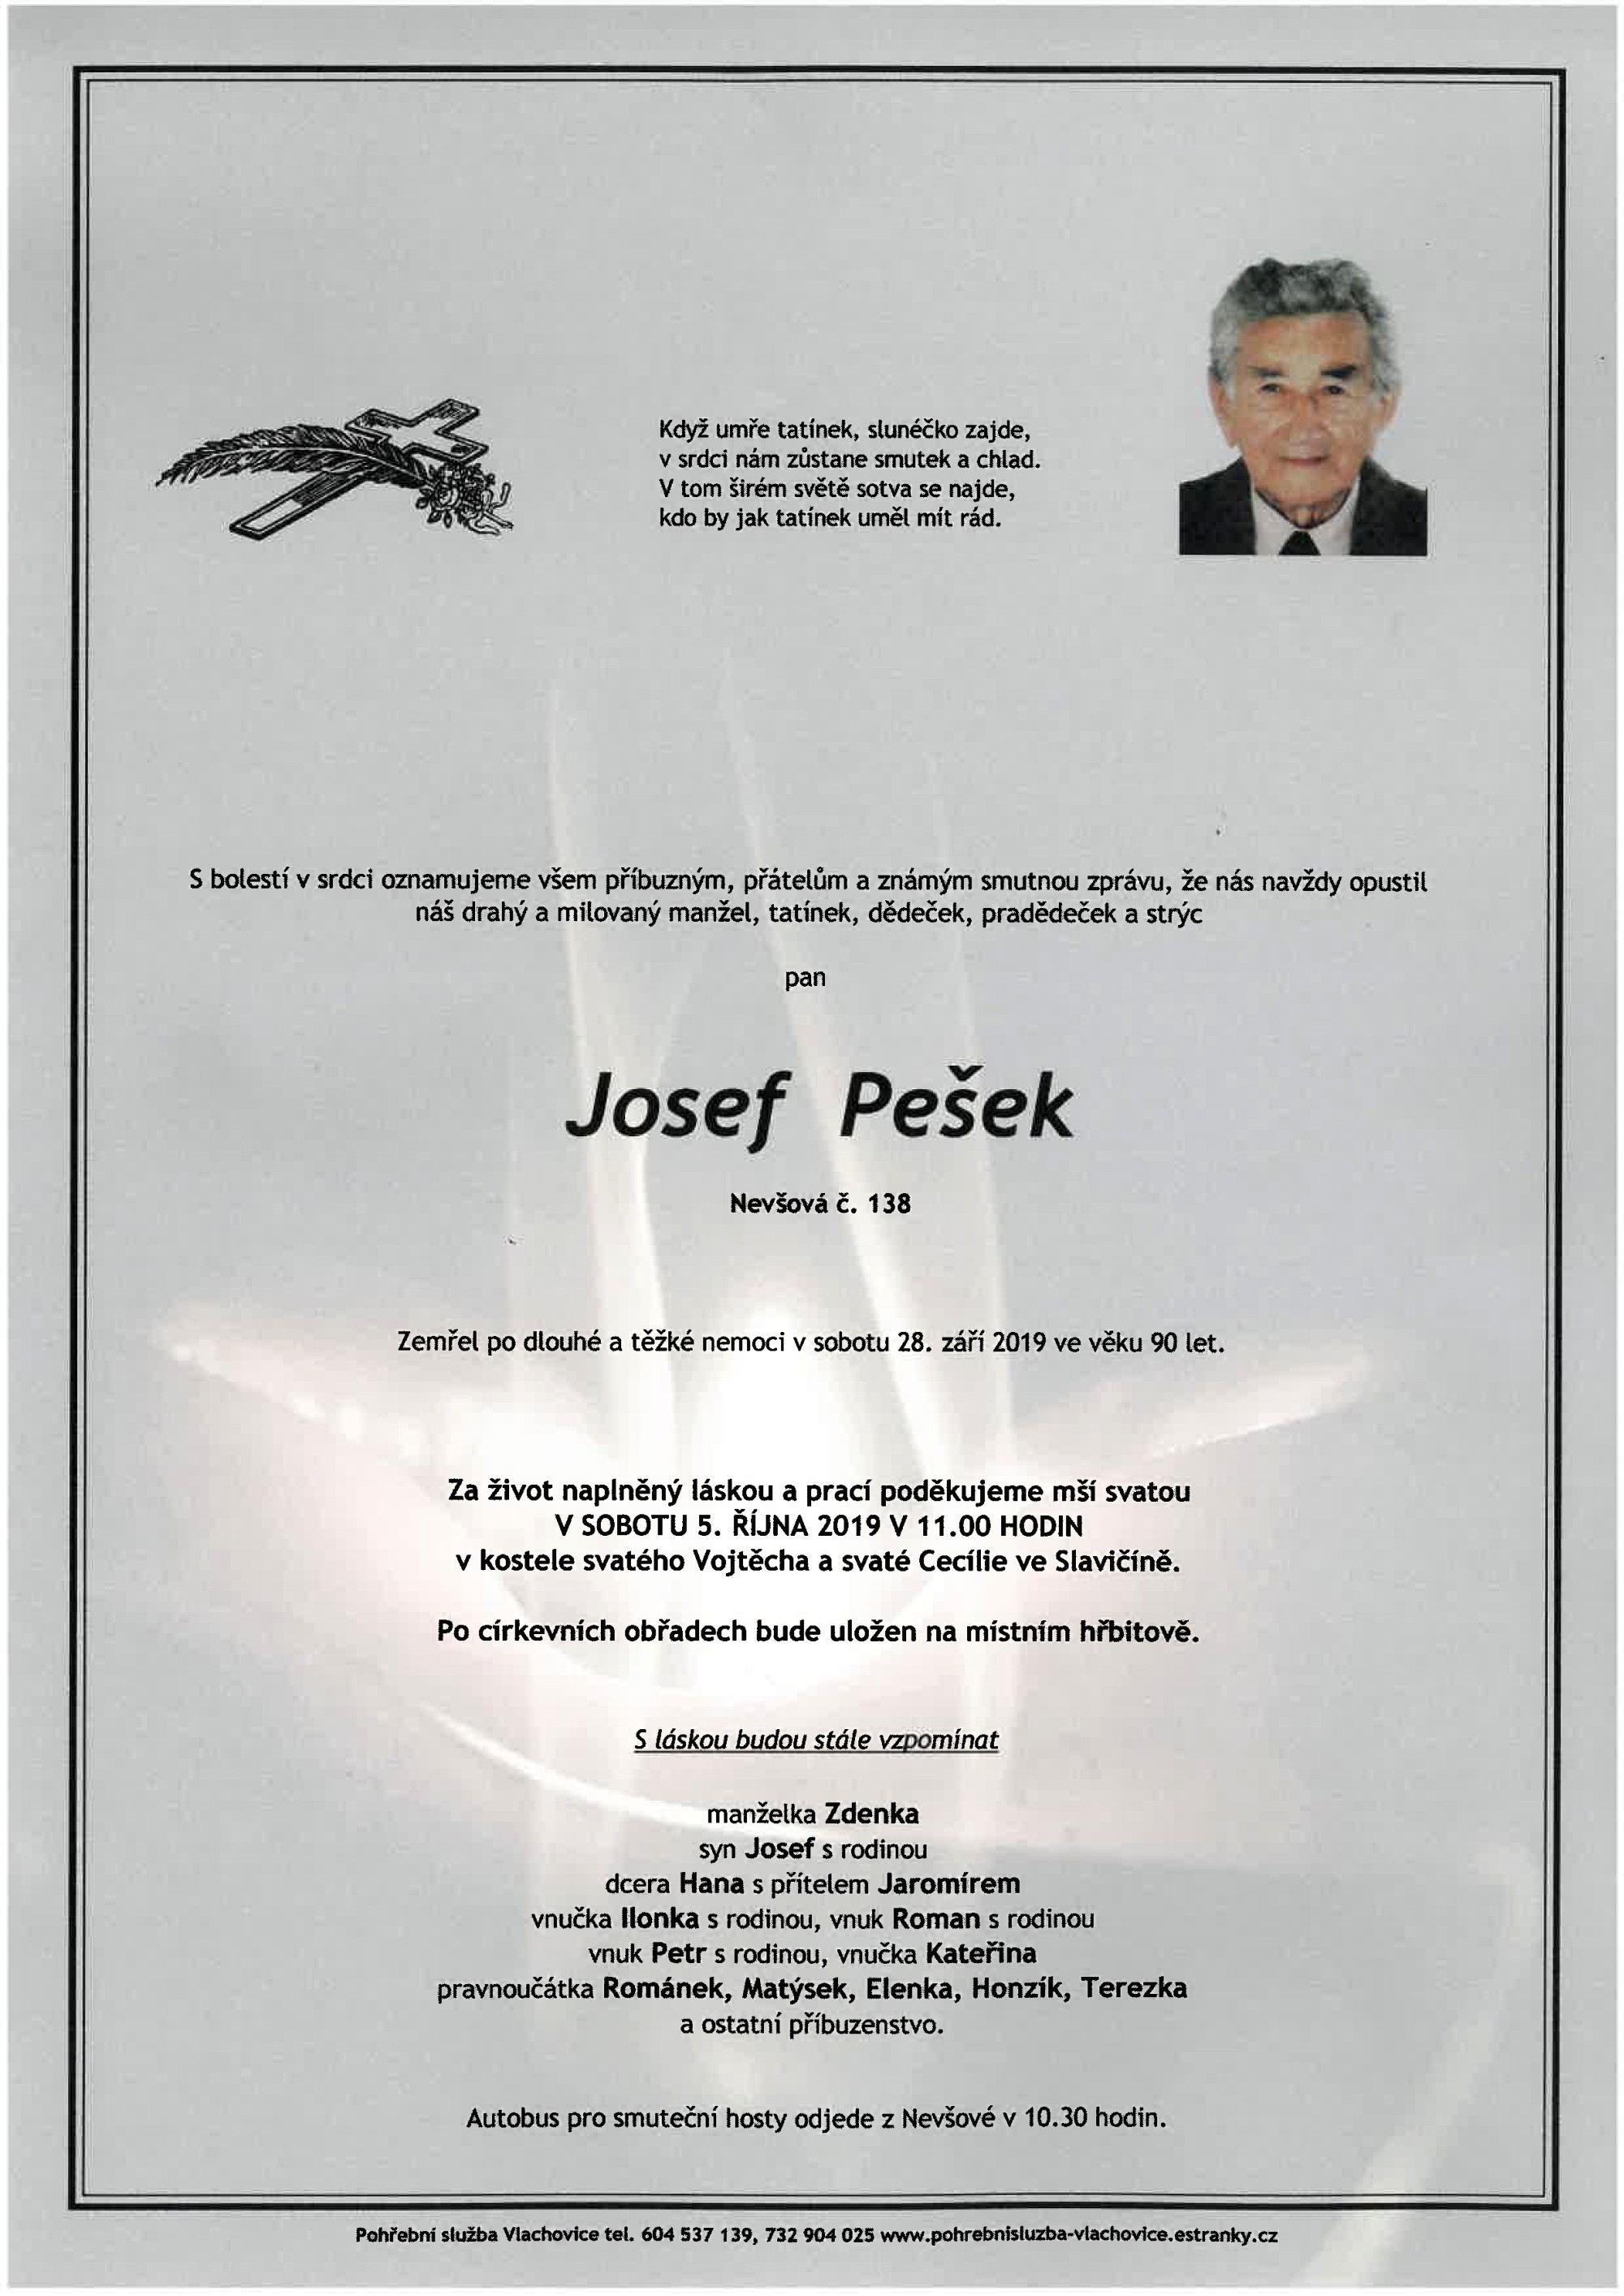 Josef Pešek